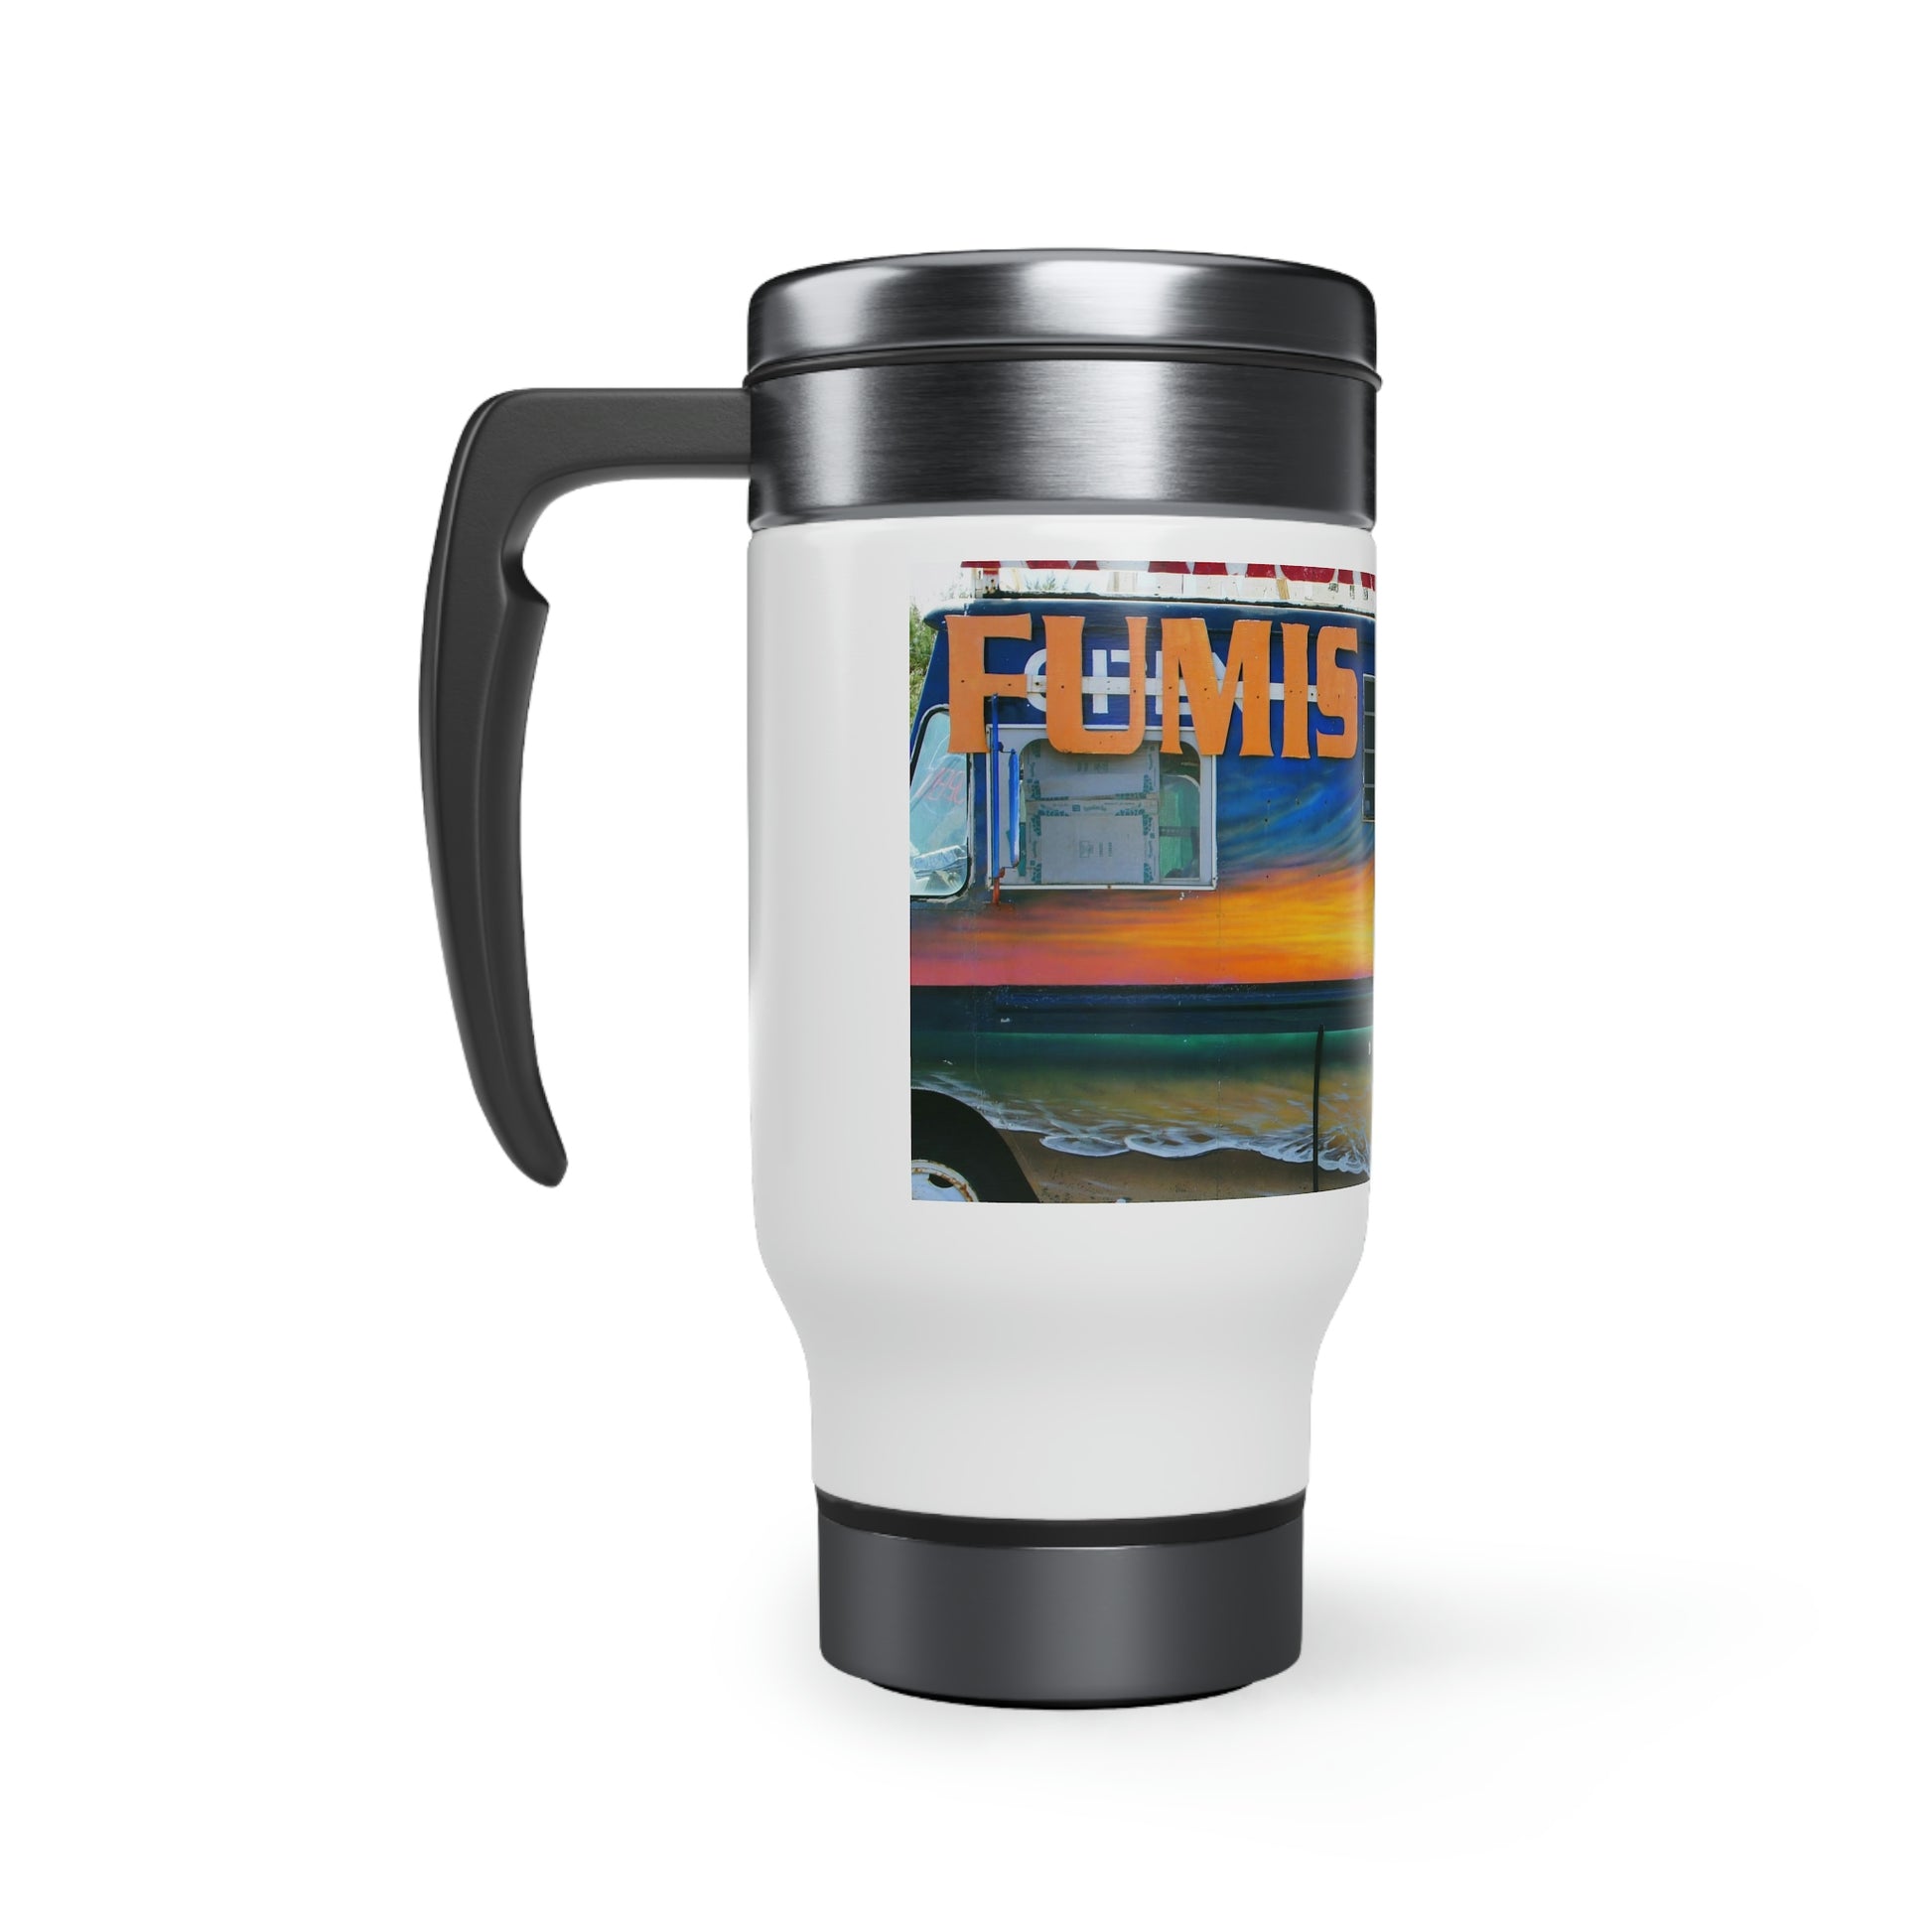 Fumis Aloha - Stainless Steel Travel Mug with Handle, 14oz - Fry1Productions